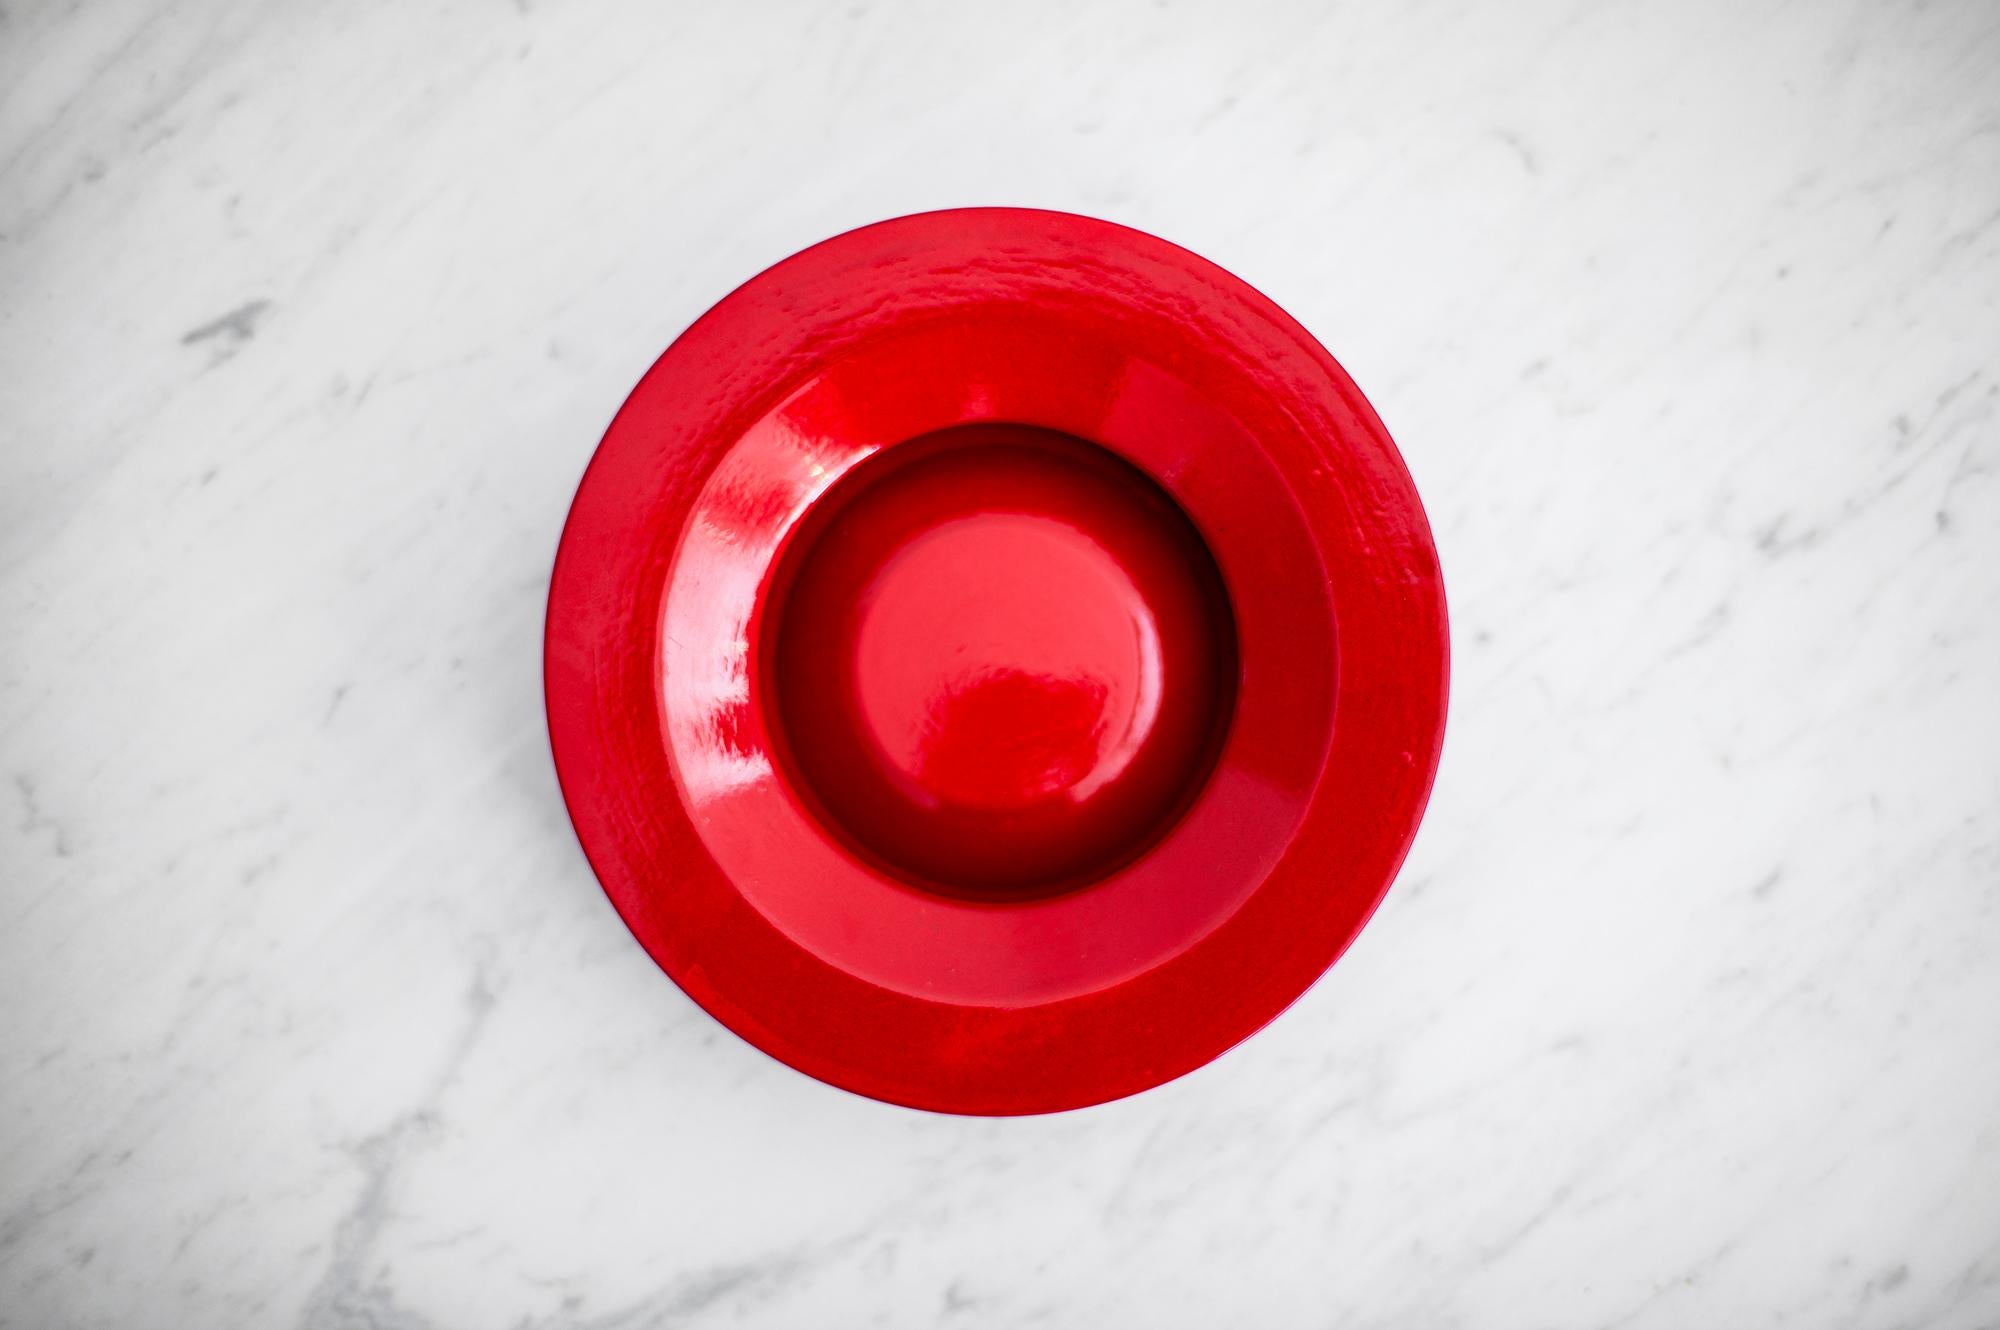 Great red ceramic ashtray by Angelo Mangiarotti. Perfect gift idea!